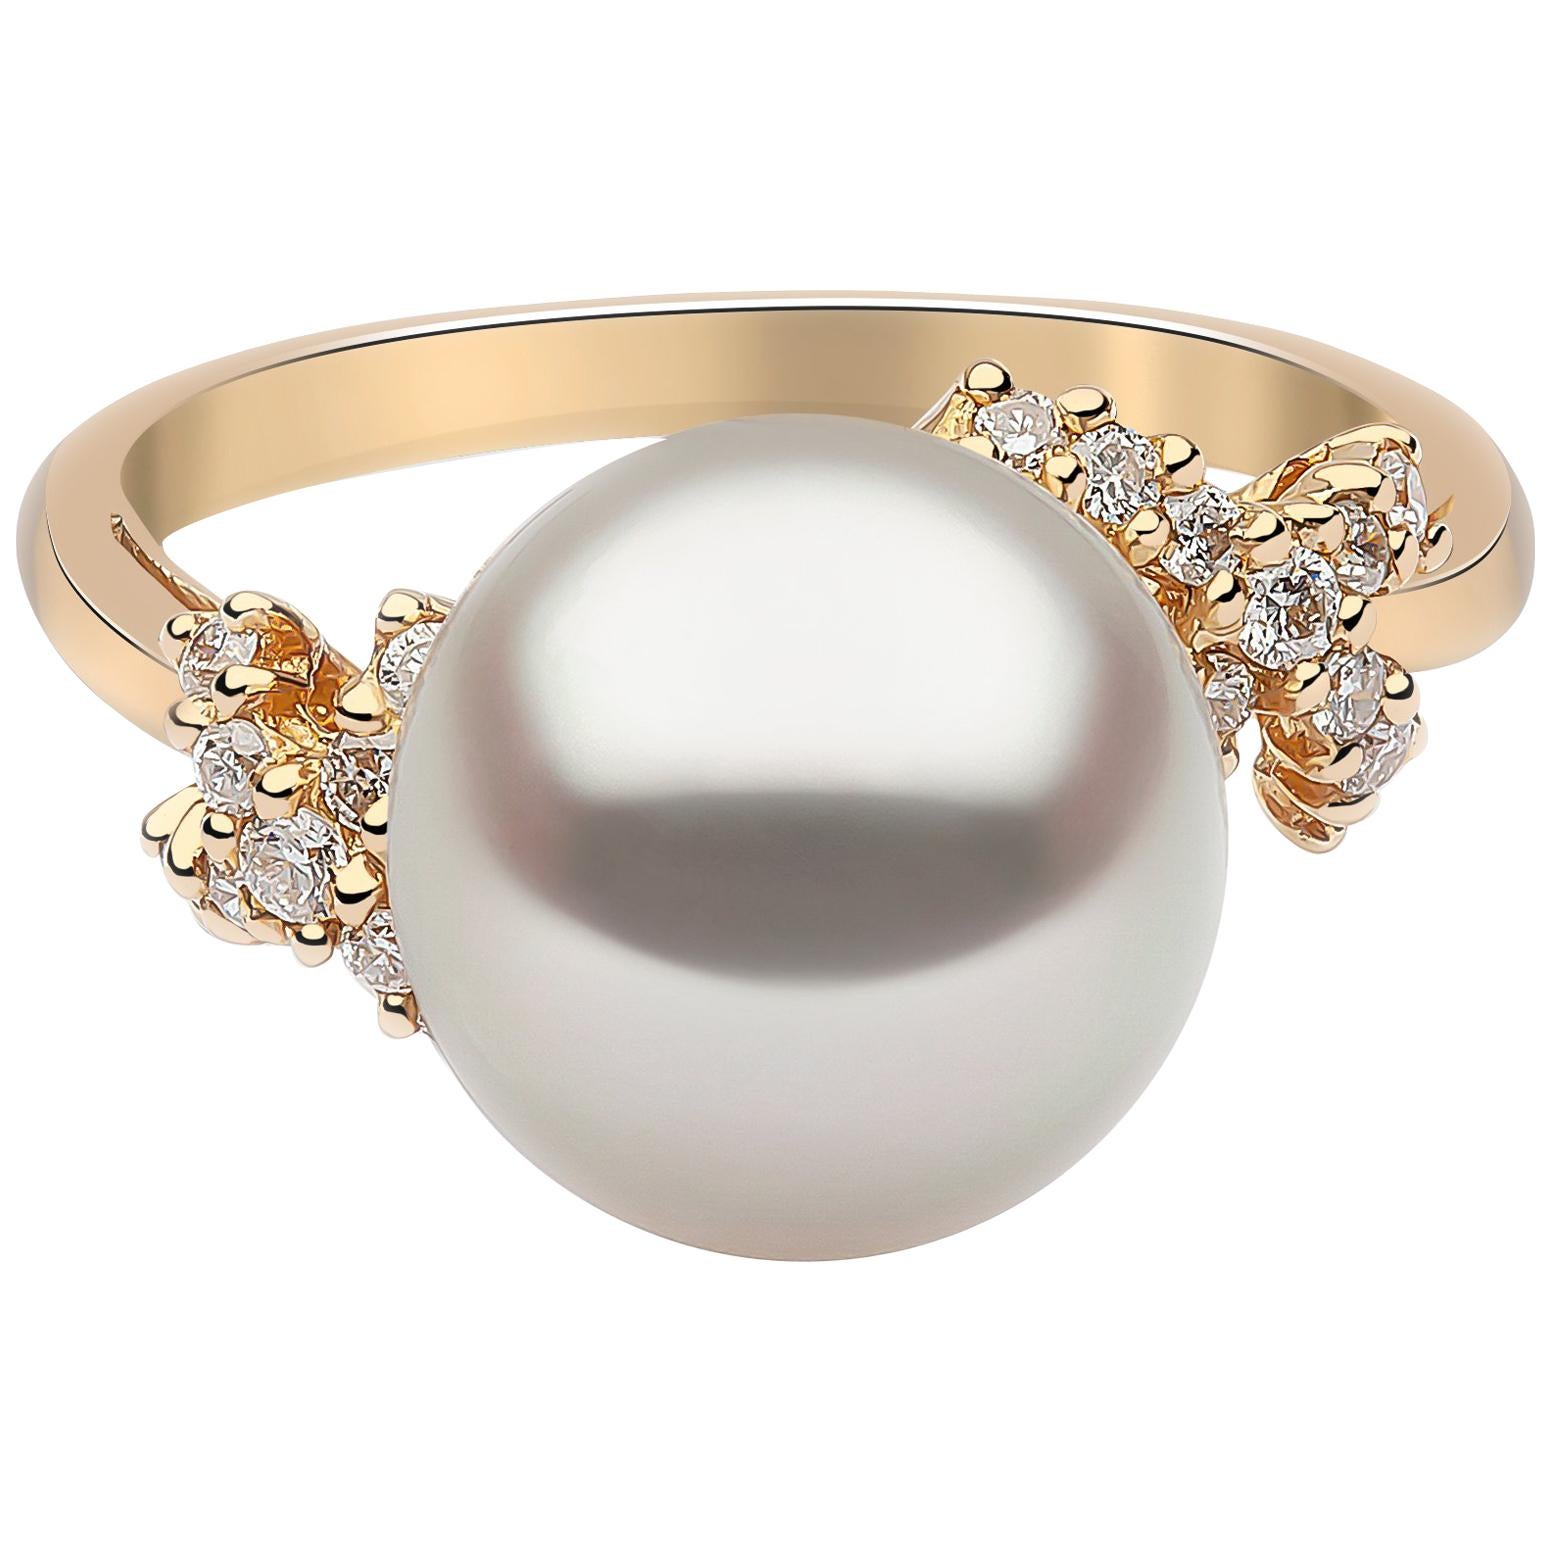 Yoko London South Sea Pearl and Diamond Ring Set in 18 Karat Yellow Gold